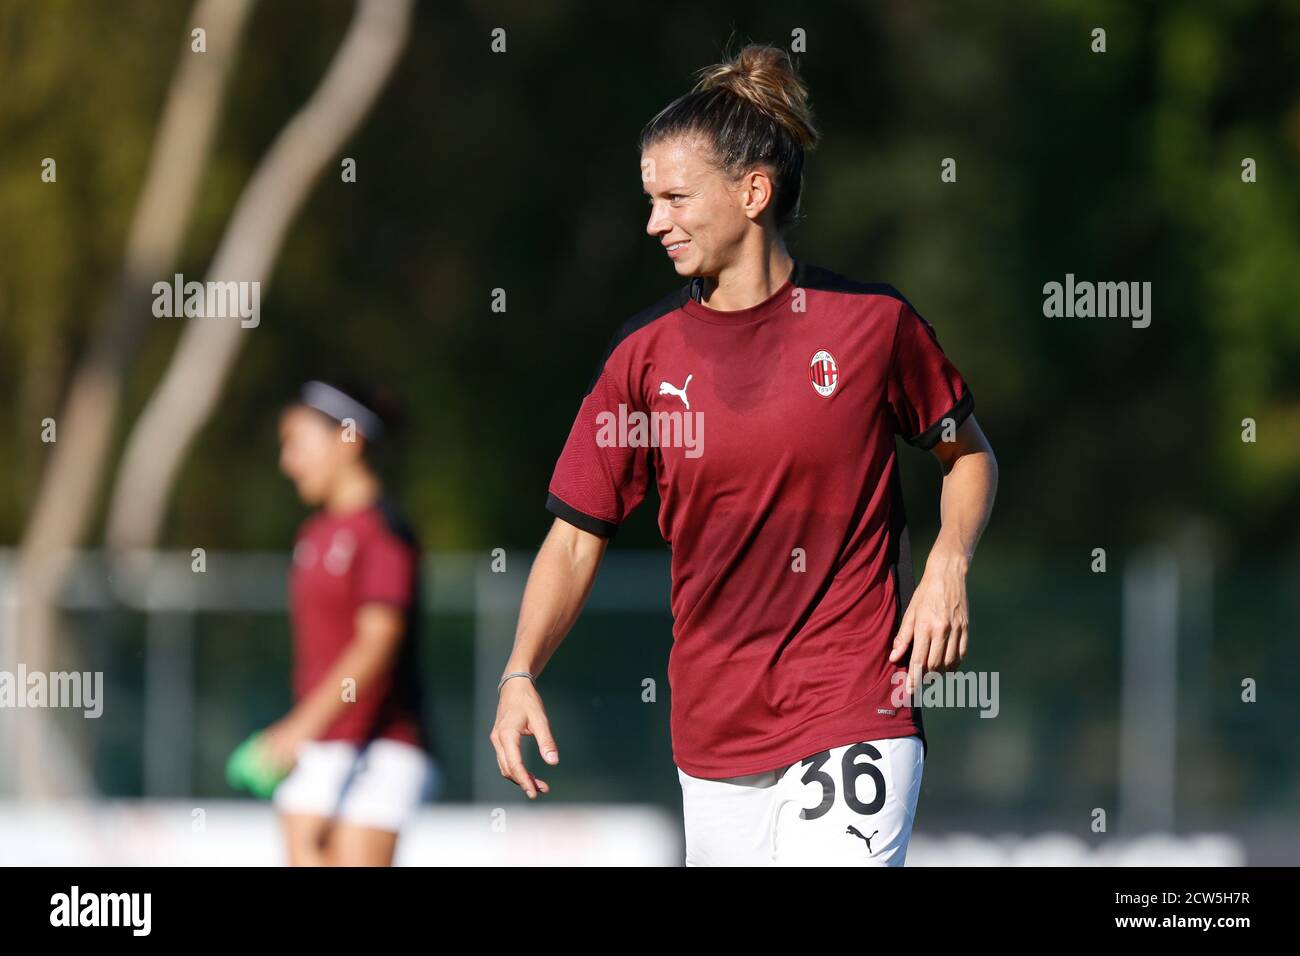 Laura Agard (AC Milan) during AC Milan vs Pink Bari, Italian Soccer Serie A Women Championship, Milan, Italy, 05 Sep 2020 Stock Photo